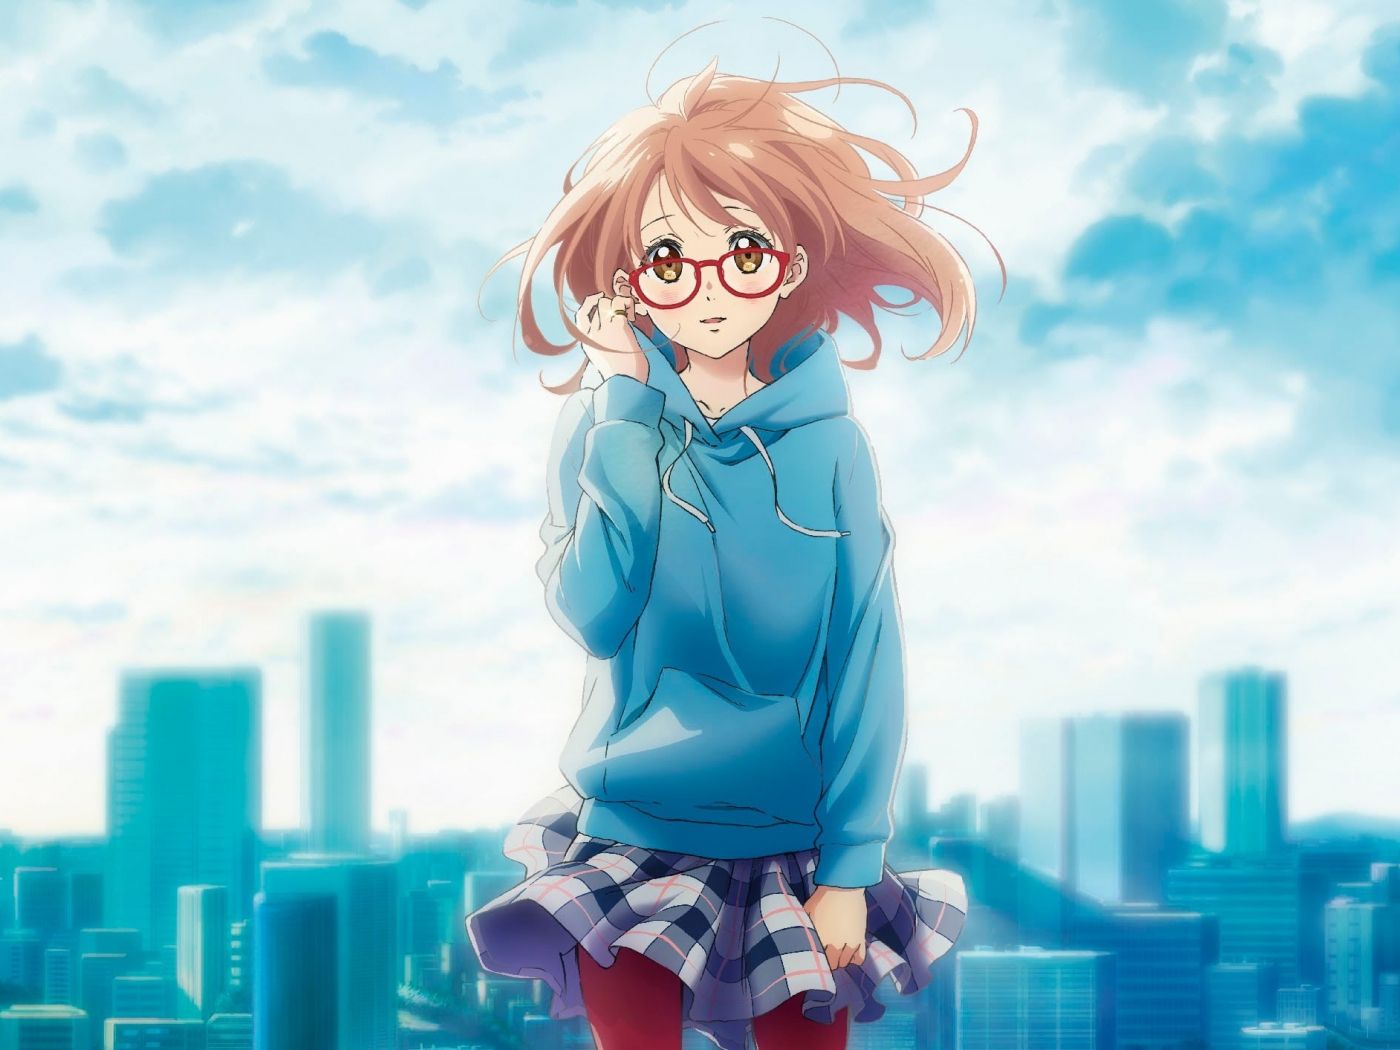 Download 1400x1050 wallpaper cute anime girl, glasses, mirai kuriyama, kyoukai no kanata, standard 4: fullscreen, 1400x1050 HD image, background, 99